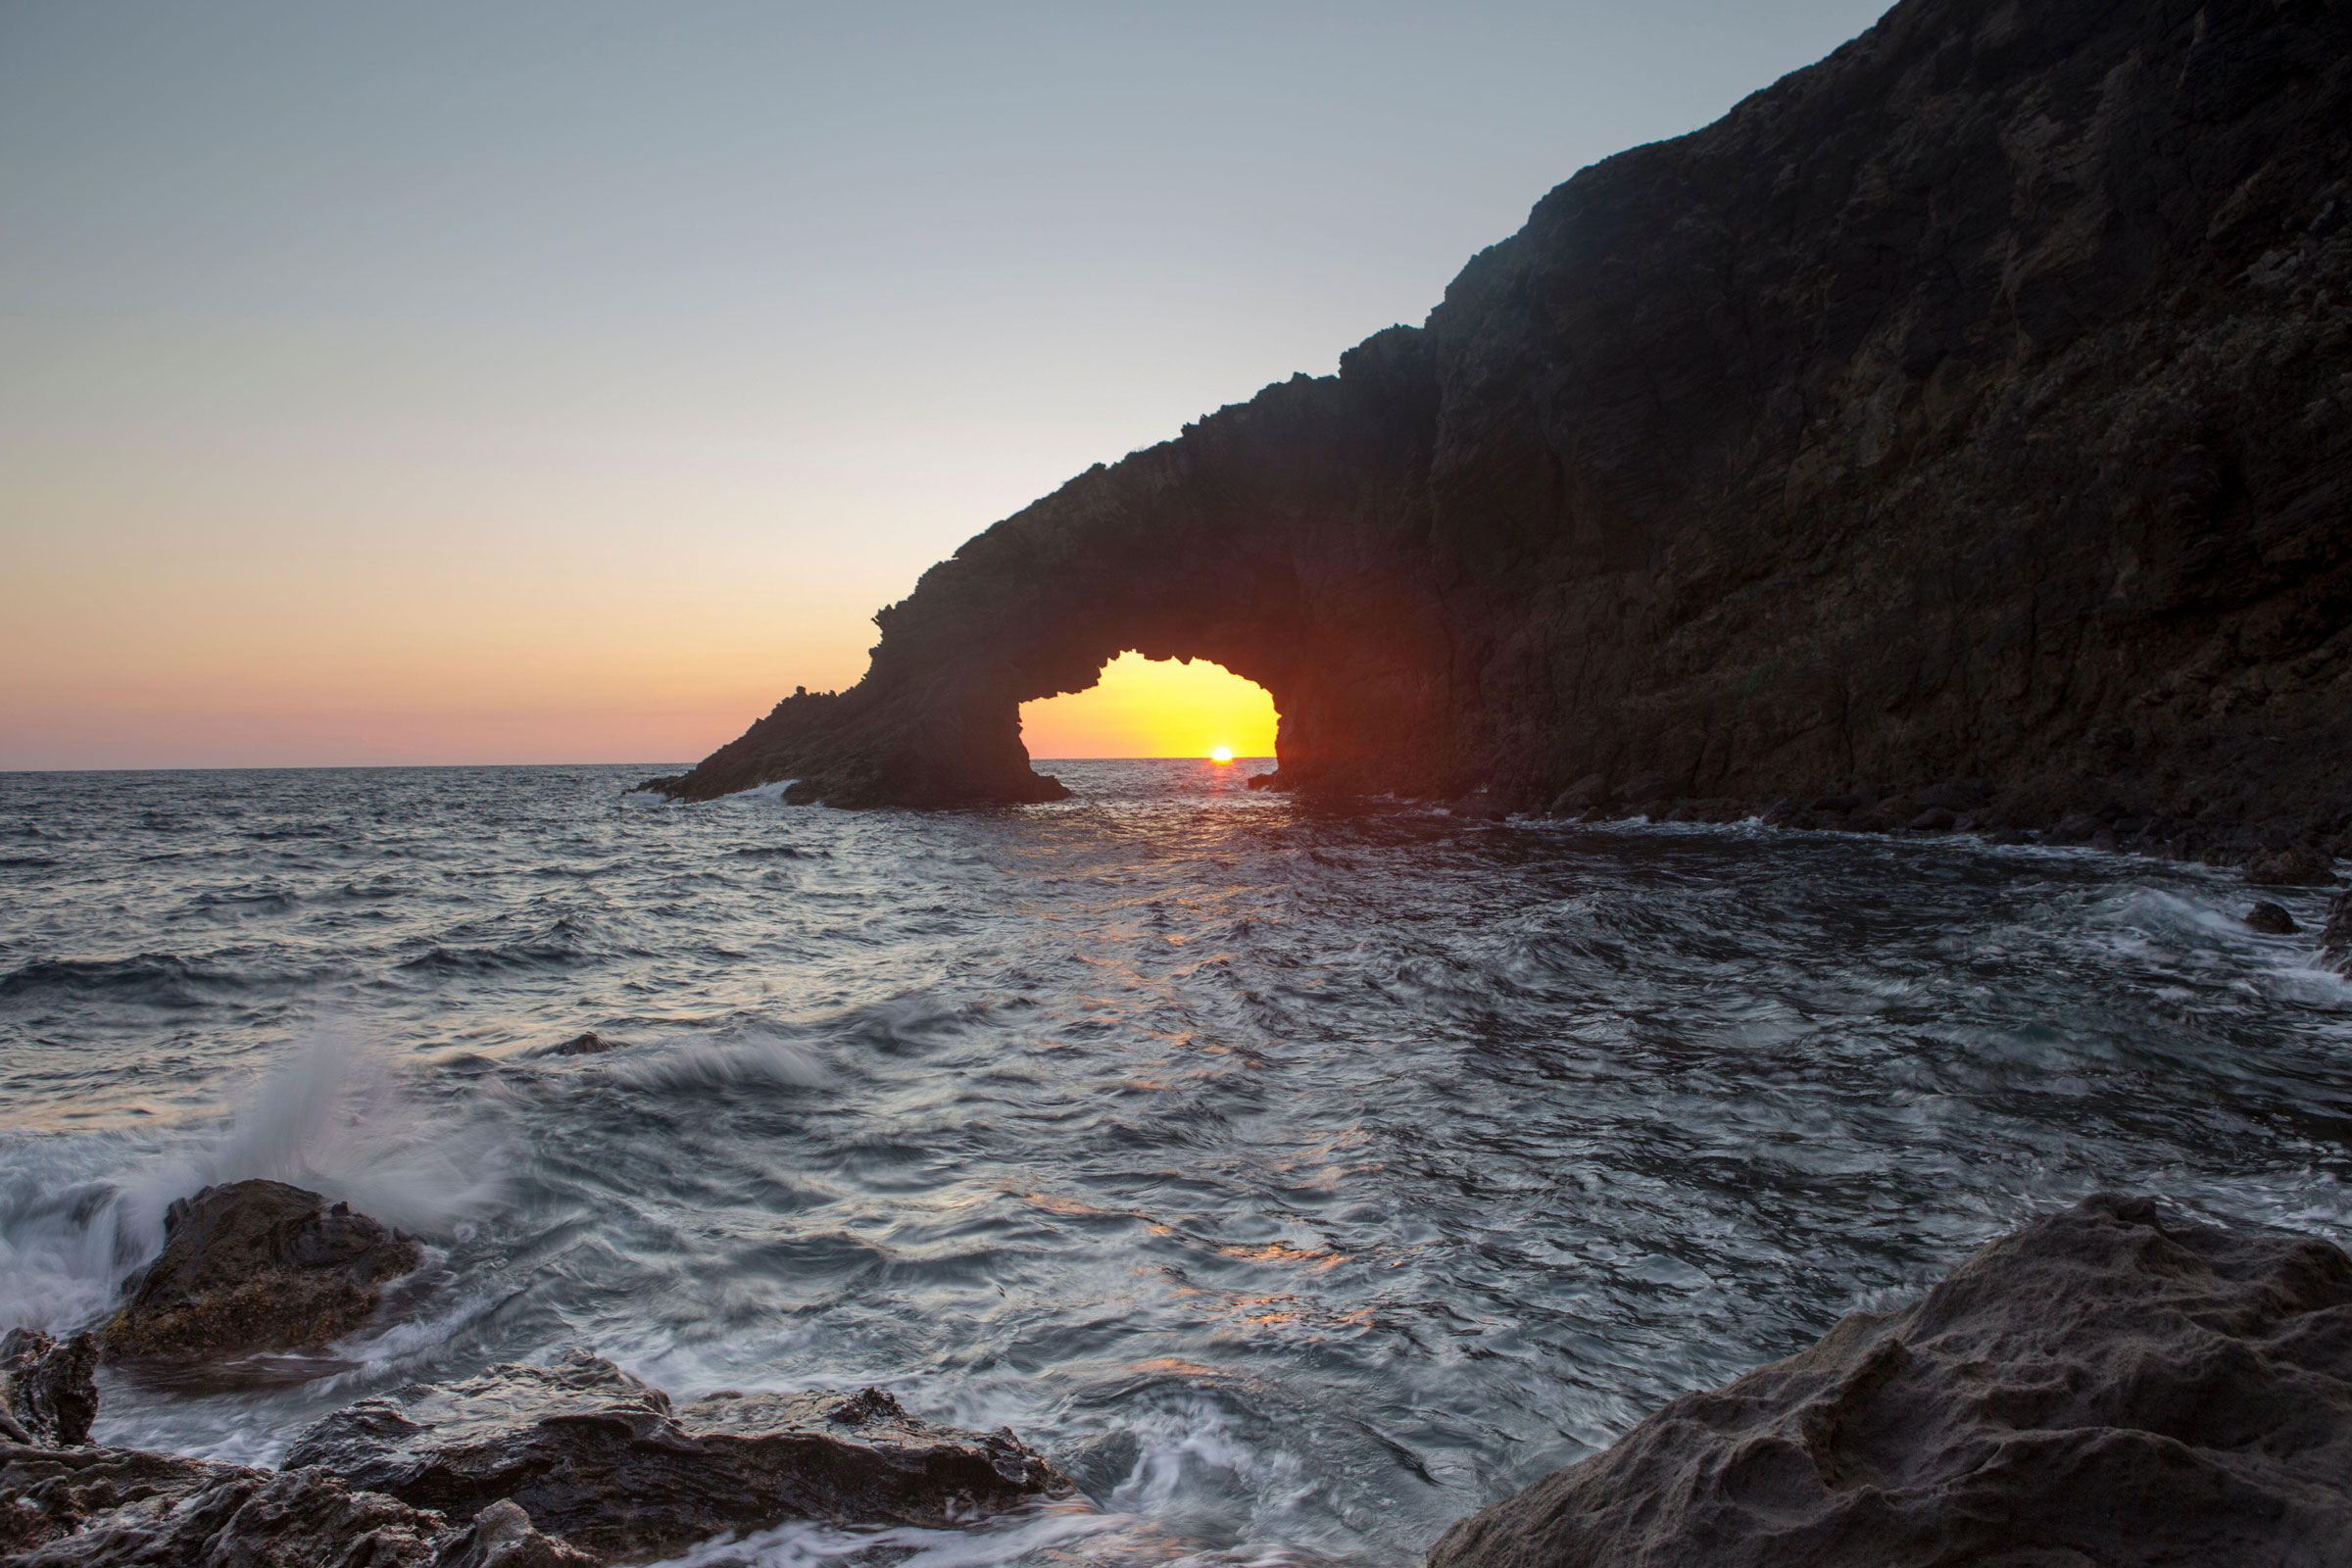 Arco dell’Elefante rock formation in Pantelleria, Italy.